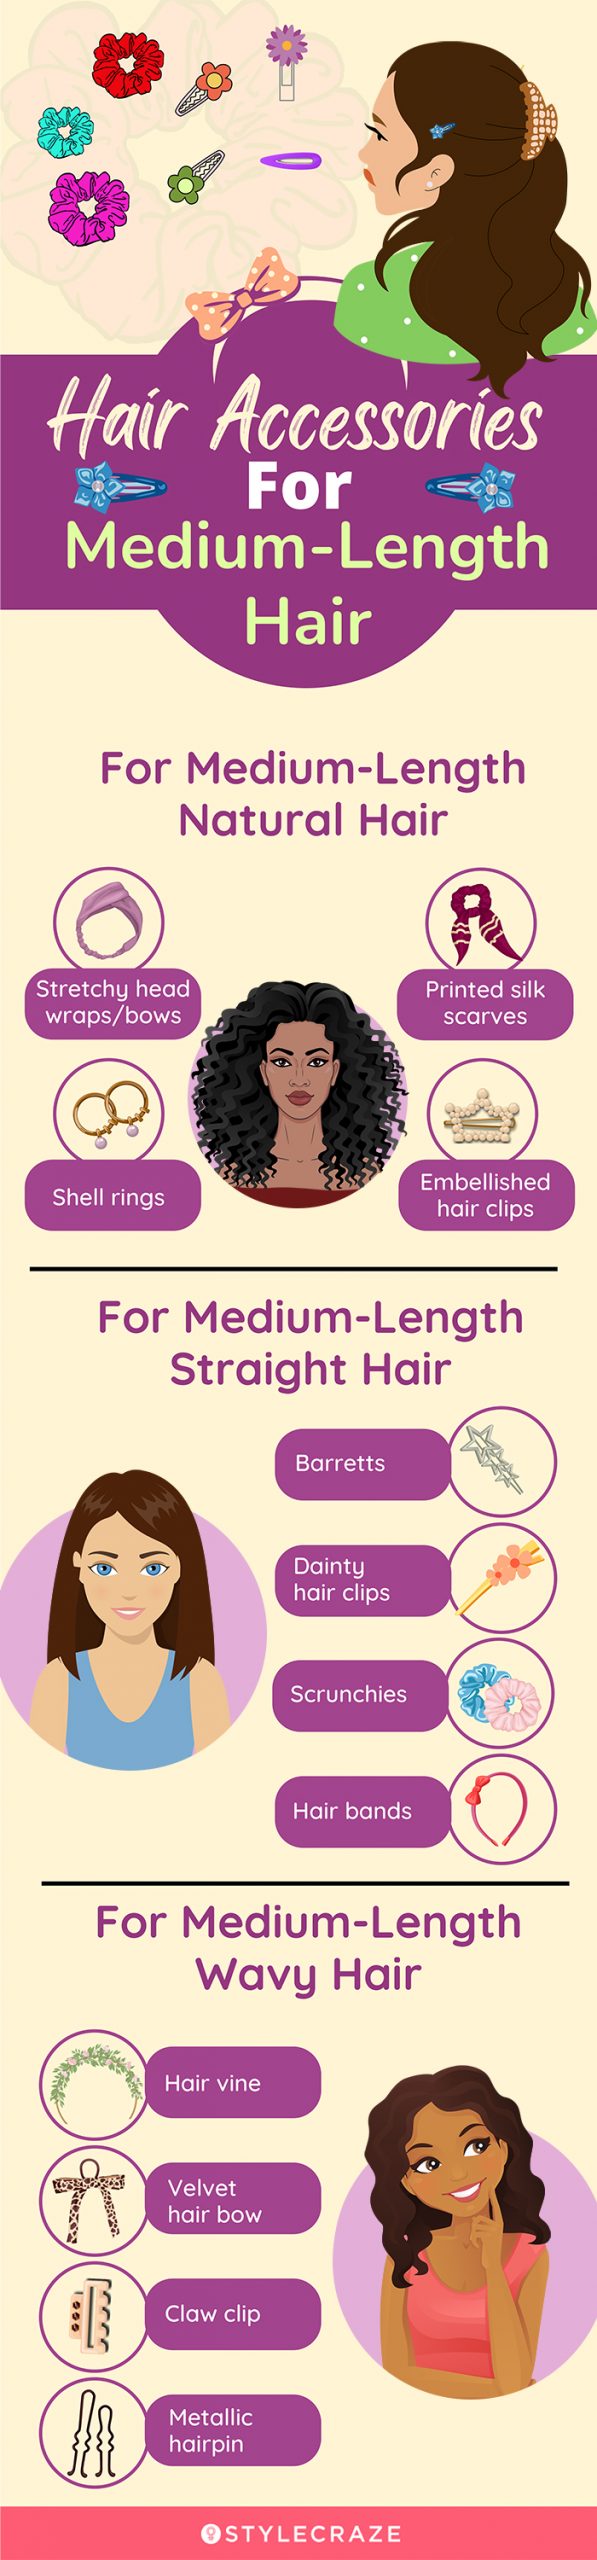 hair accessories for medium length hair [infographic]